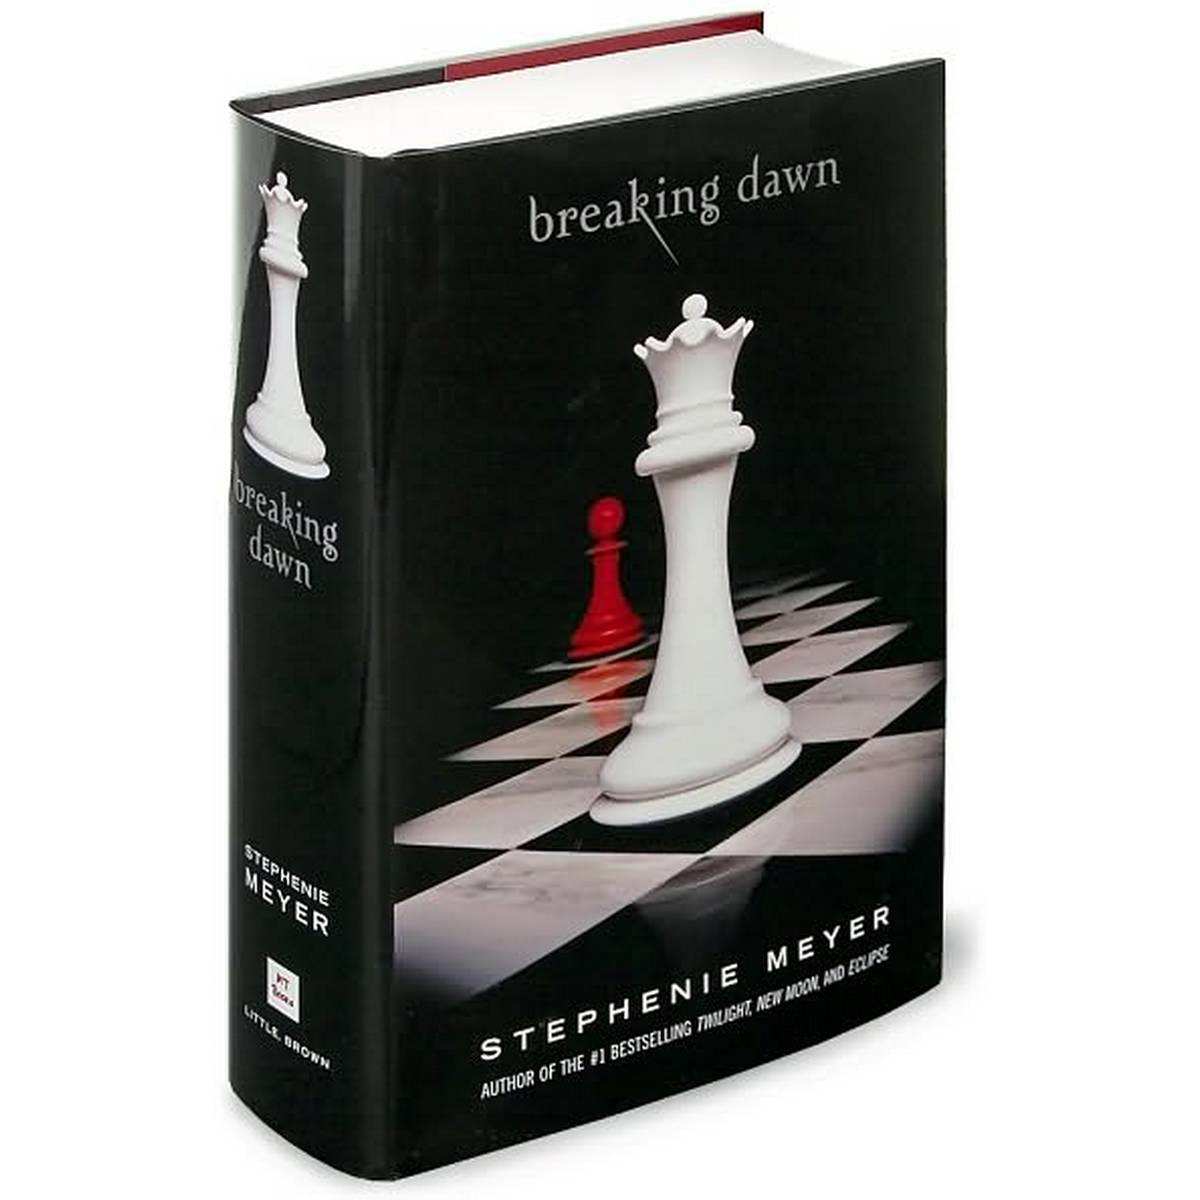 Breaking Dawn: The Twilight Trilogy